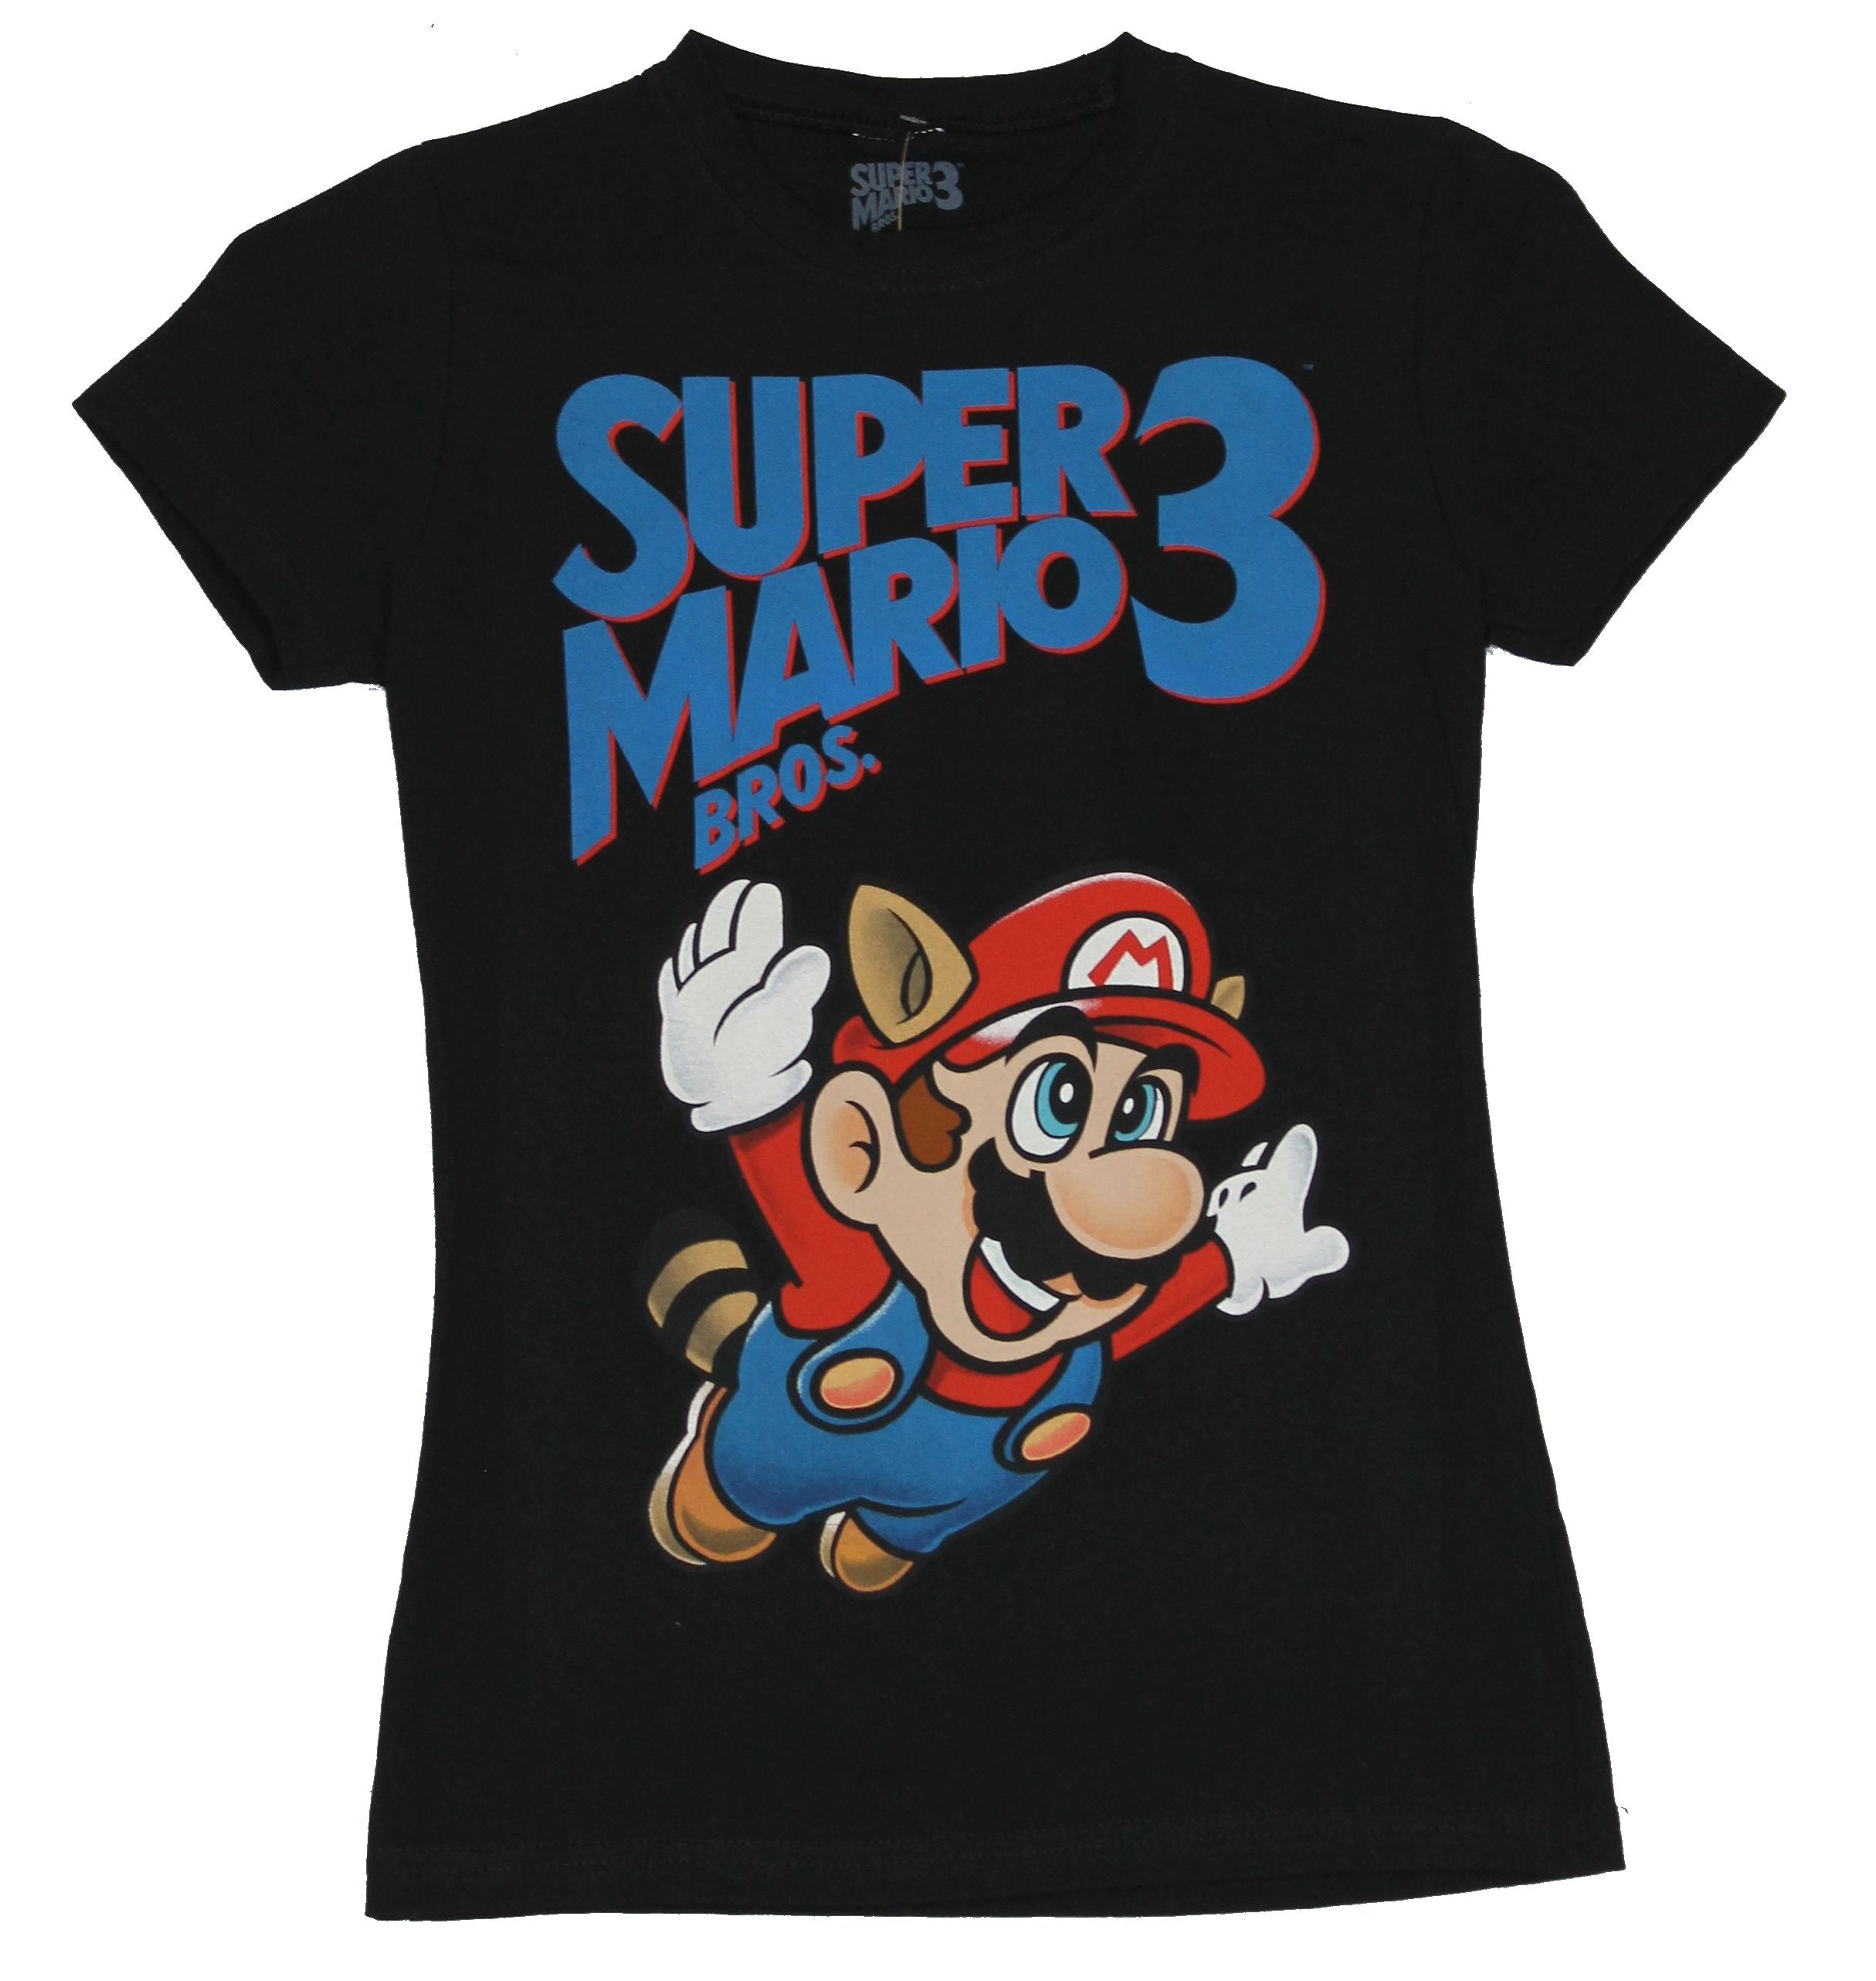 Super Mario Brothers 3 Girls Juniors  T-Shirt -  Classi cRacoon Mario Logo Image